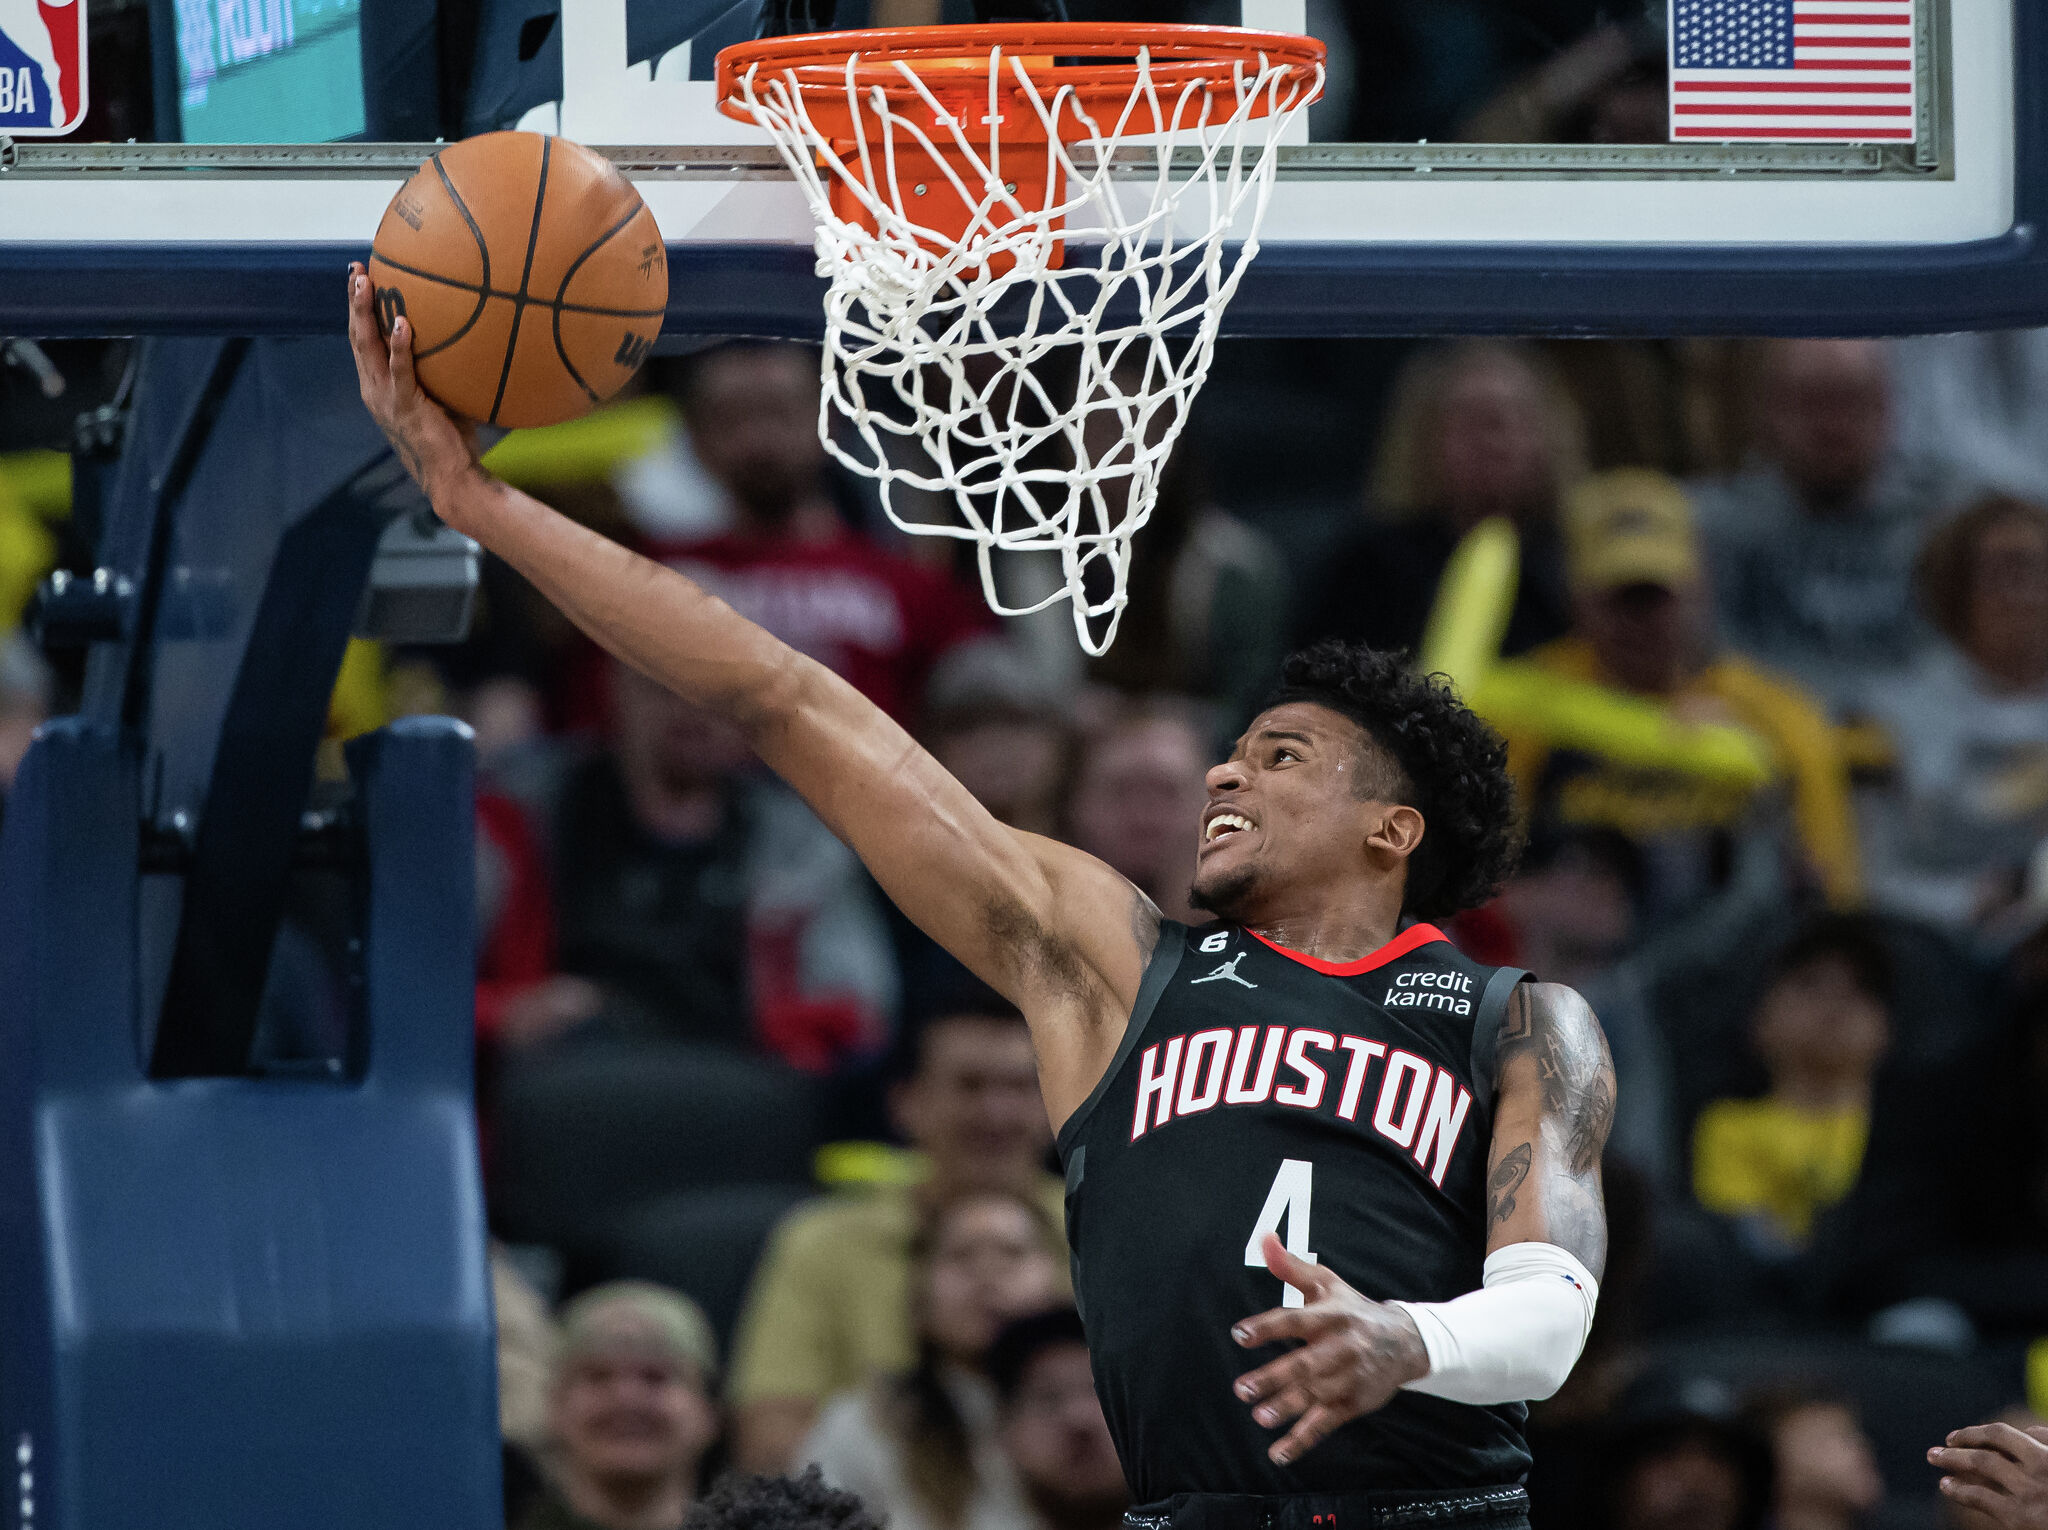 Houston Rockets backcourt shines in preseason loss to Heat